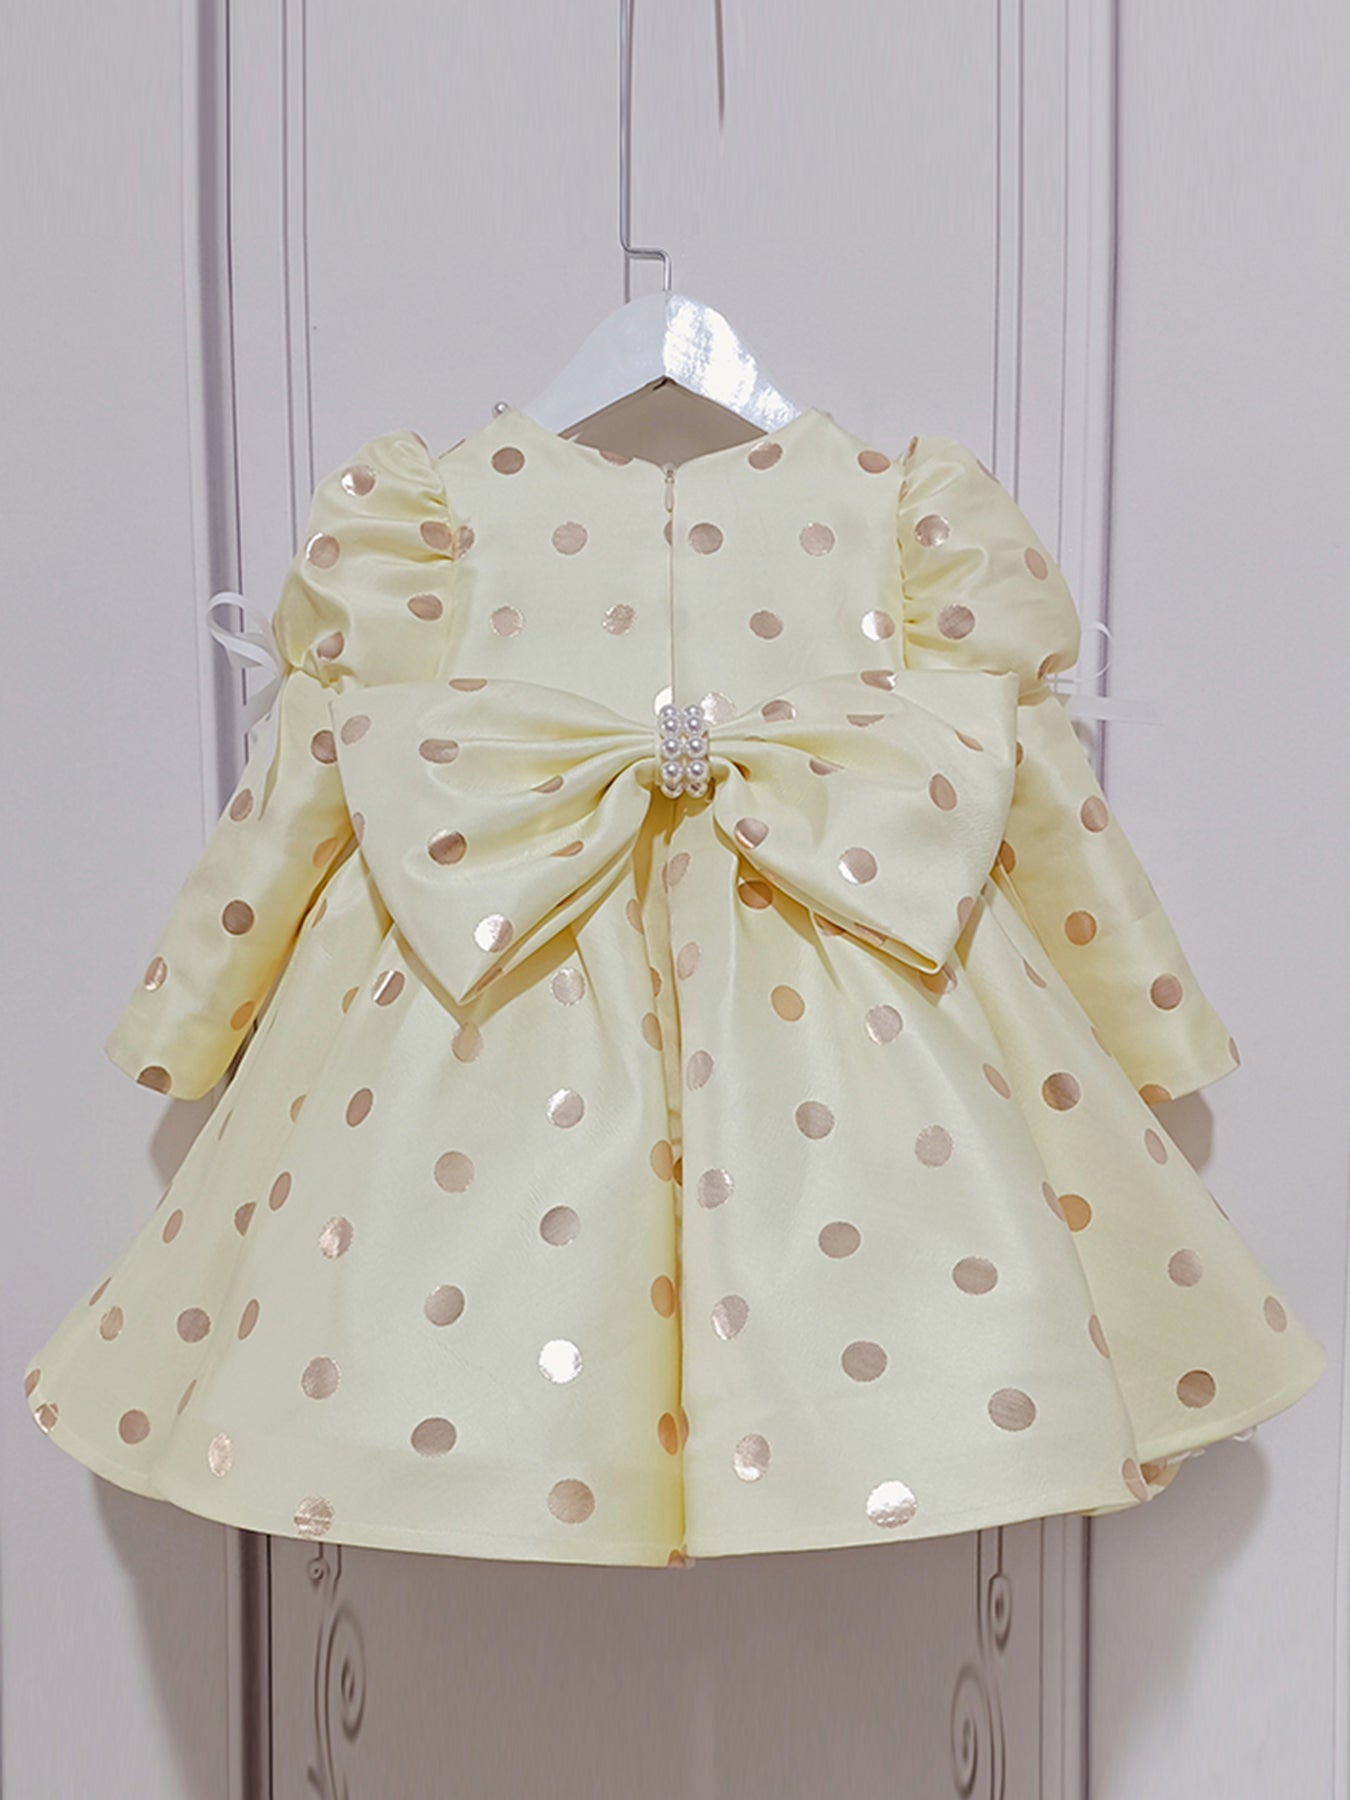 A gold polka dot princess dress